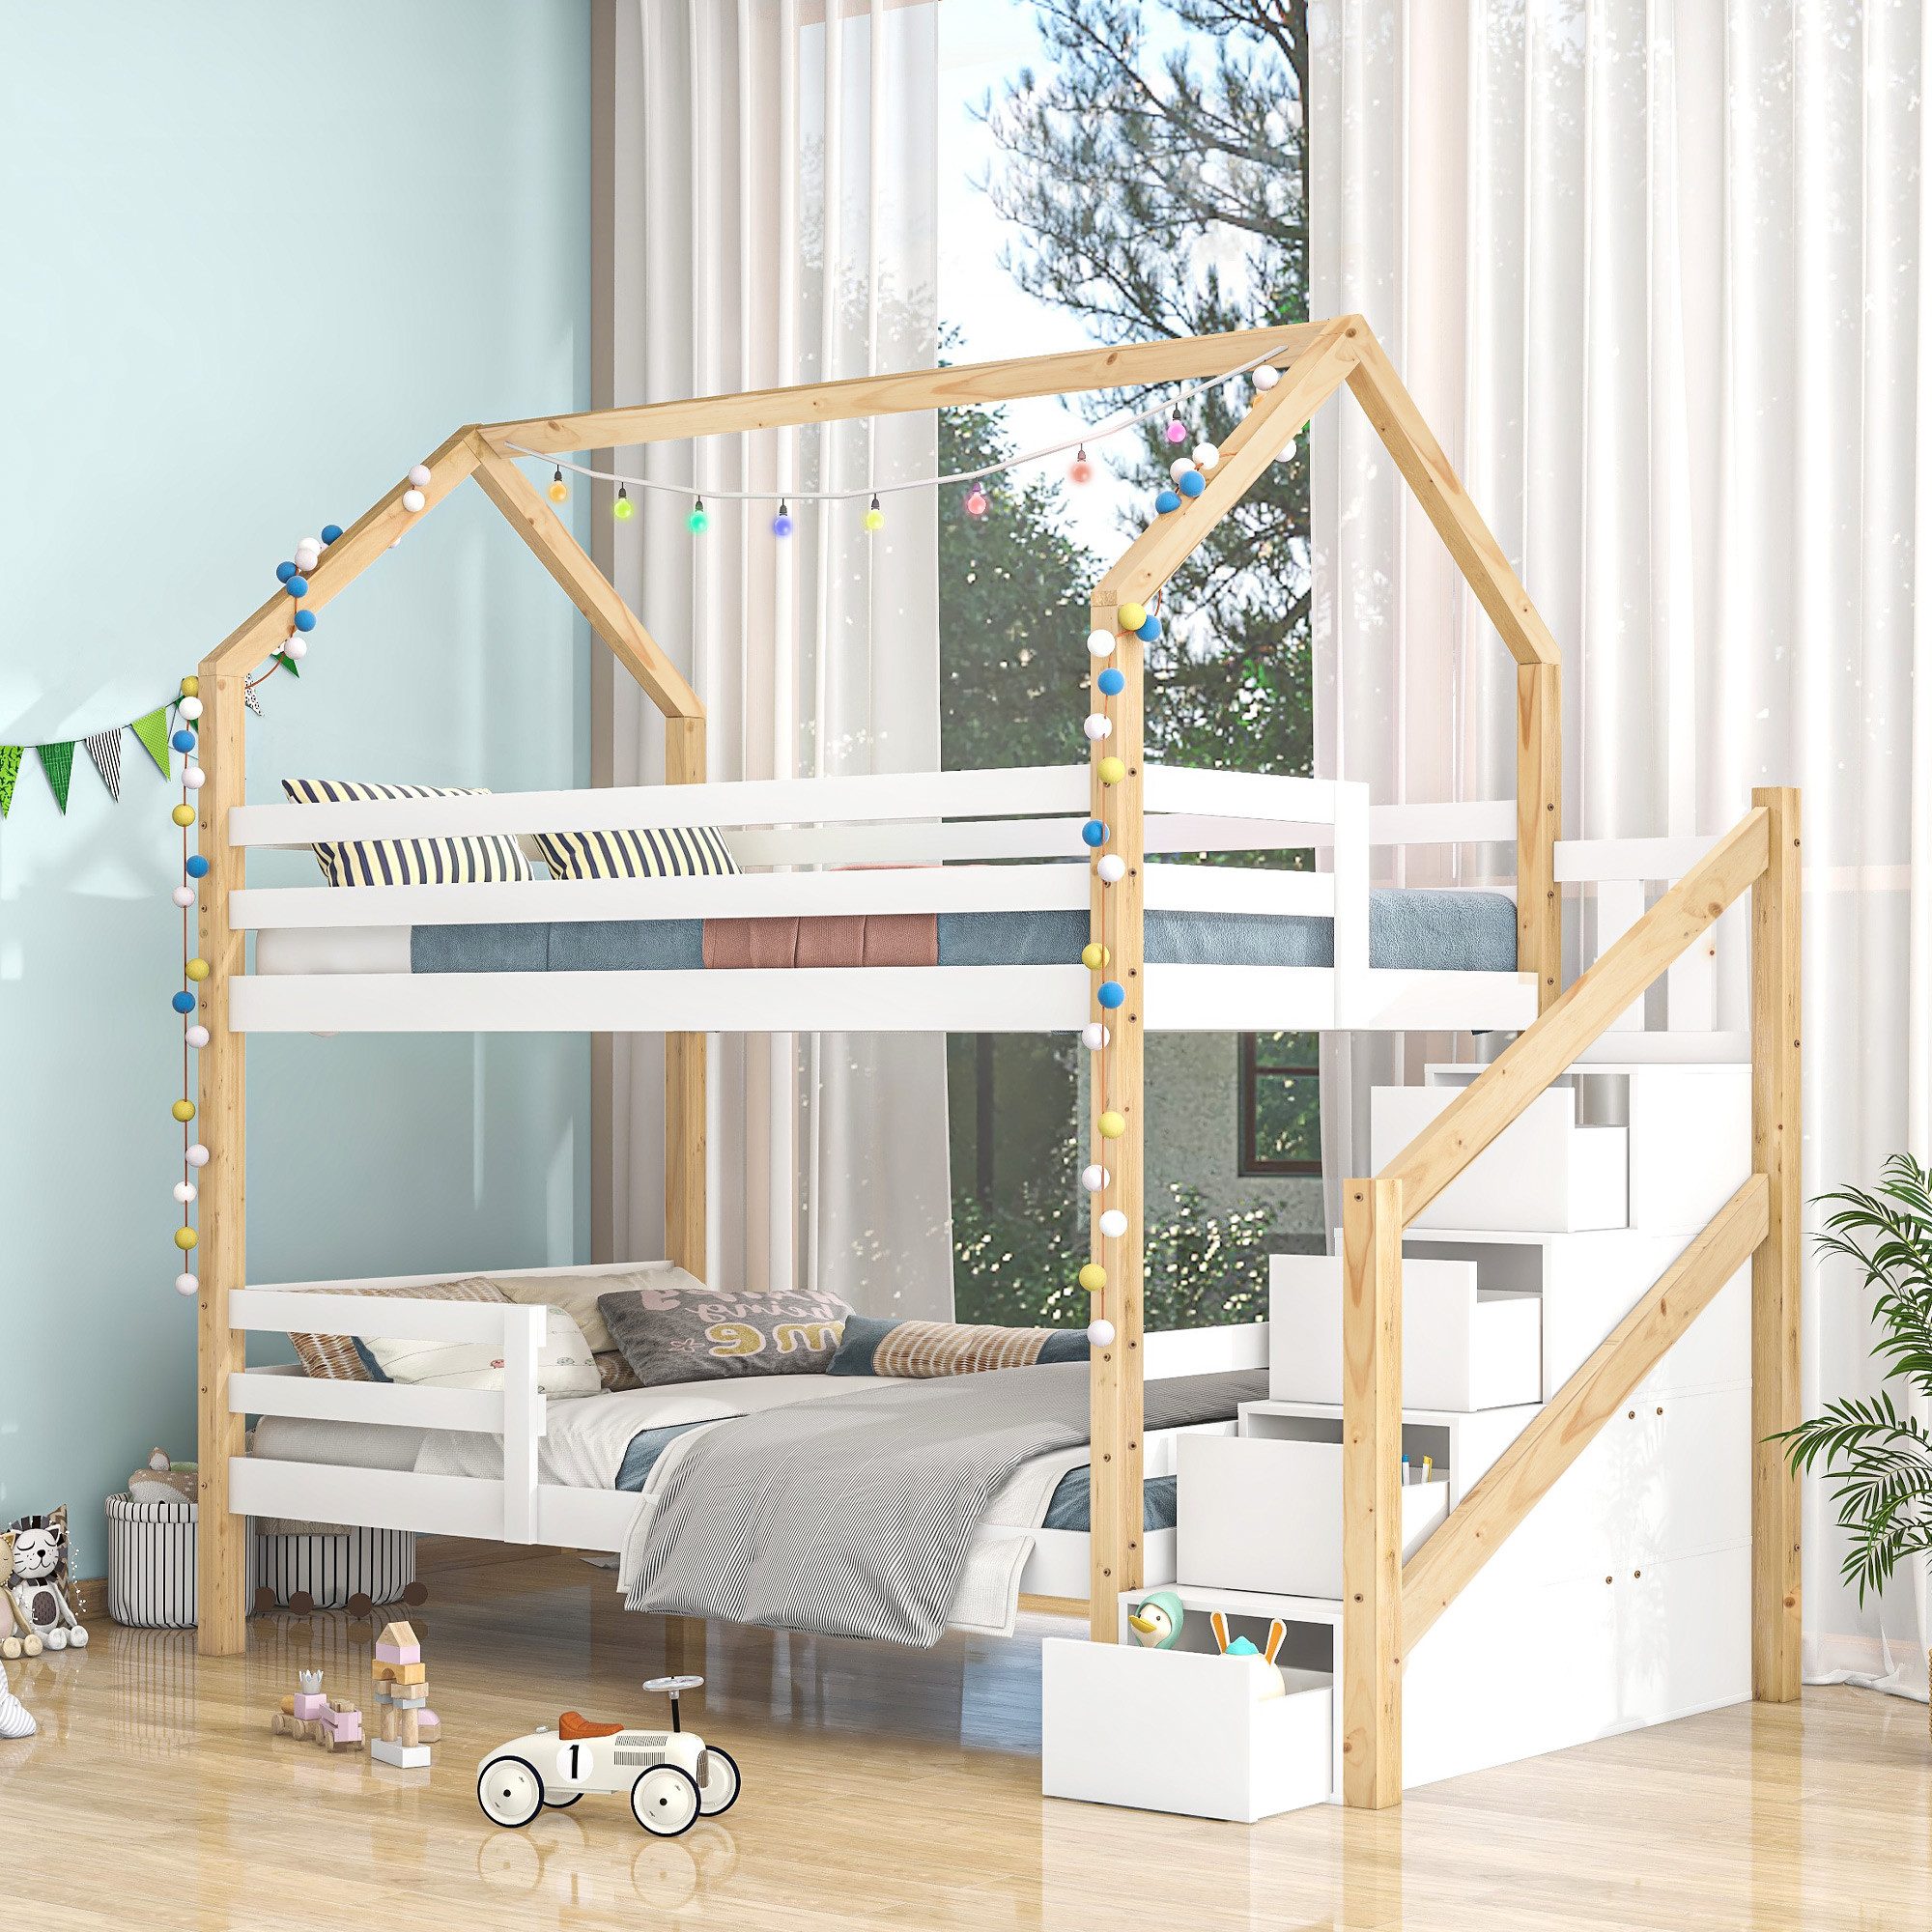 autolock Kinderbett Ins aus dem Bett kommen Doppelbett,Kinderbett in Hausform, Leiterschrank,Kiefernholz Haus Bett for Kids, 90 x 200 cm